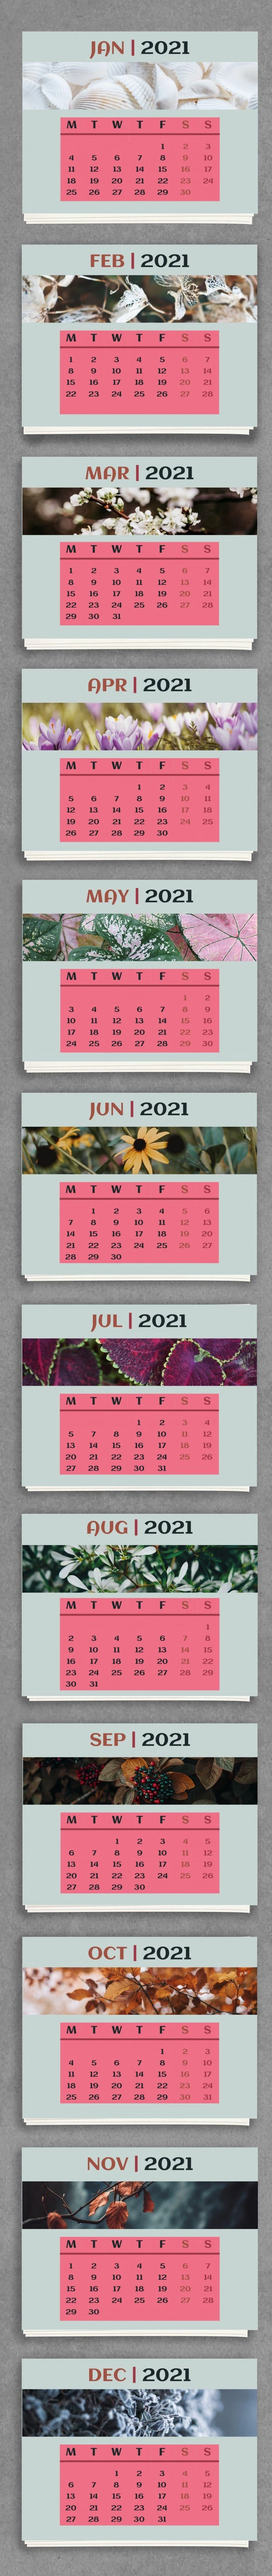 Beautiful Monthly Calendar 2021 - free Google Docs Template - 10061561